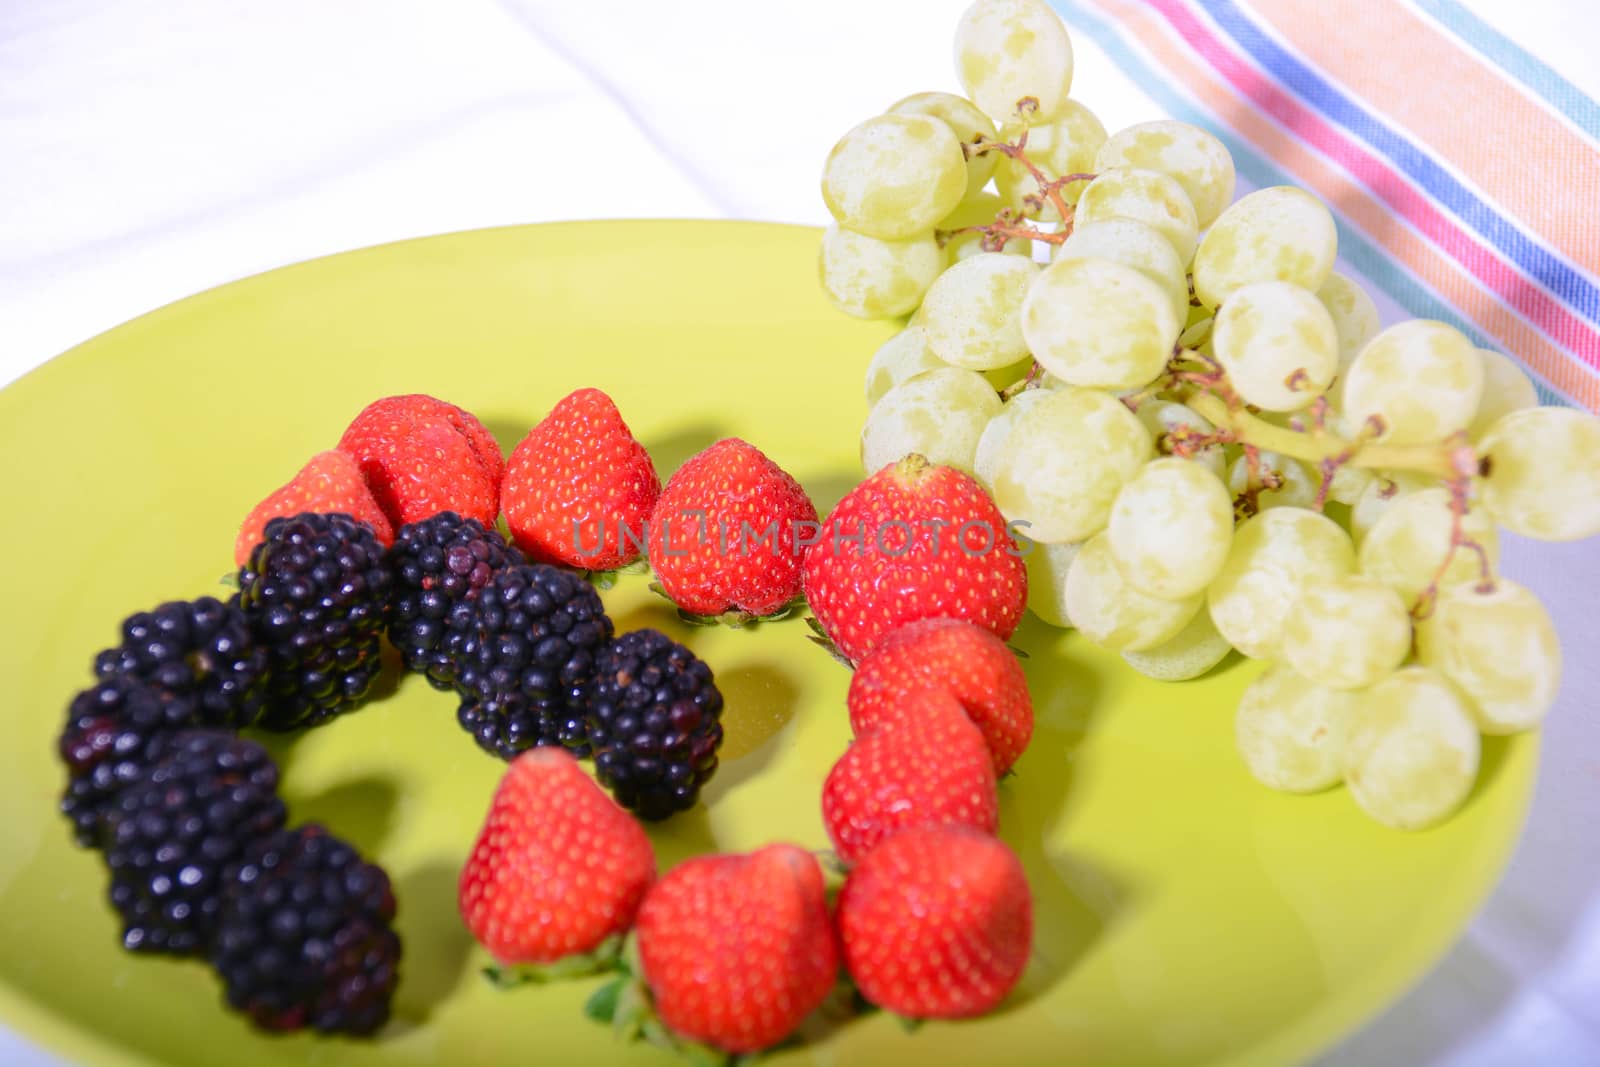 healthy fruits 7 by iacobino